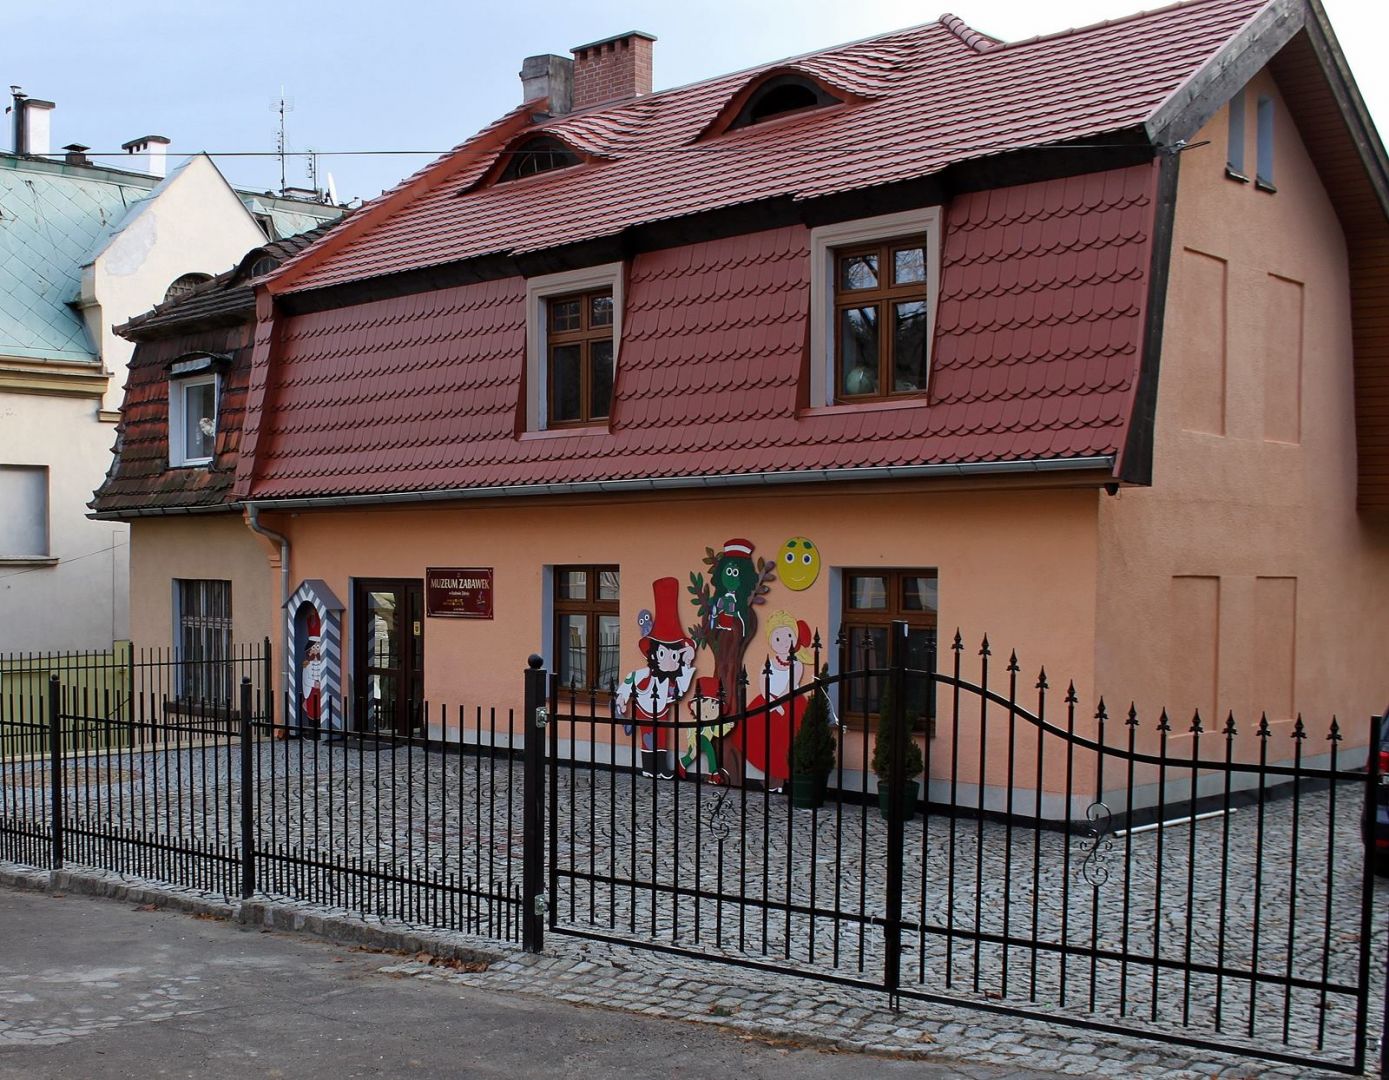 Bajka Toy Museum